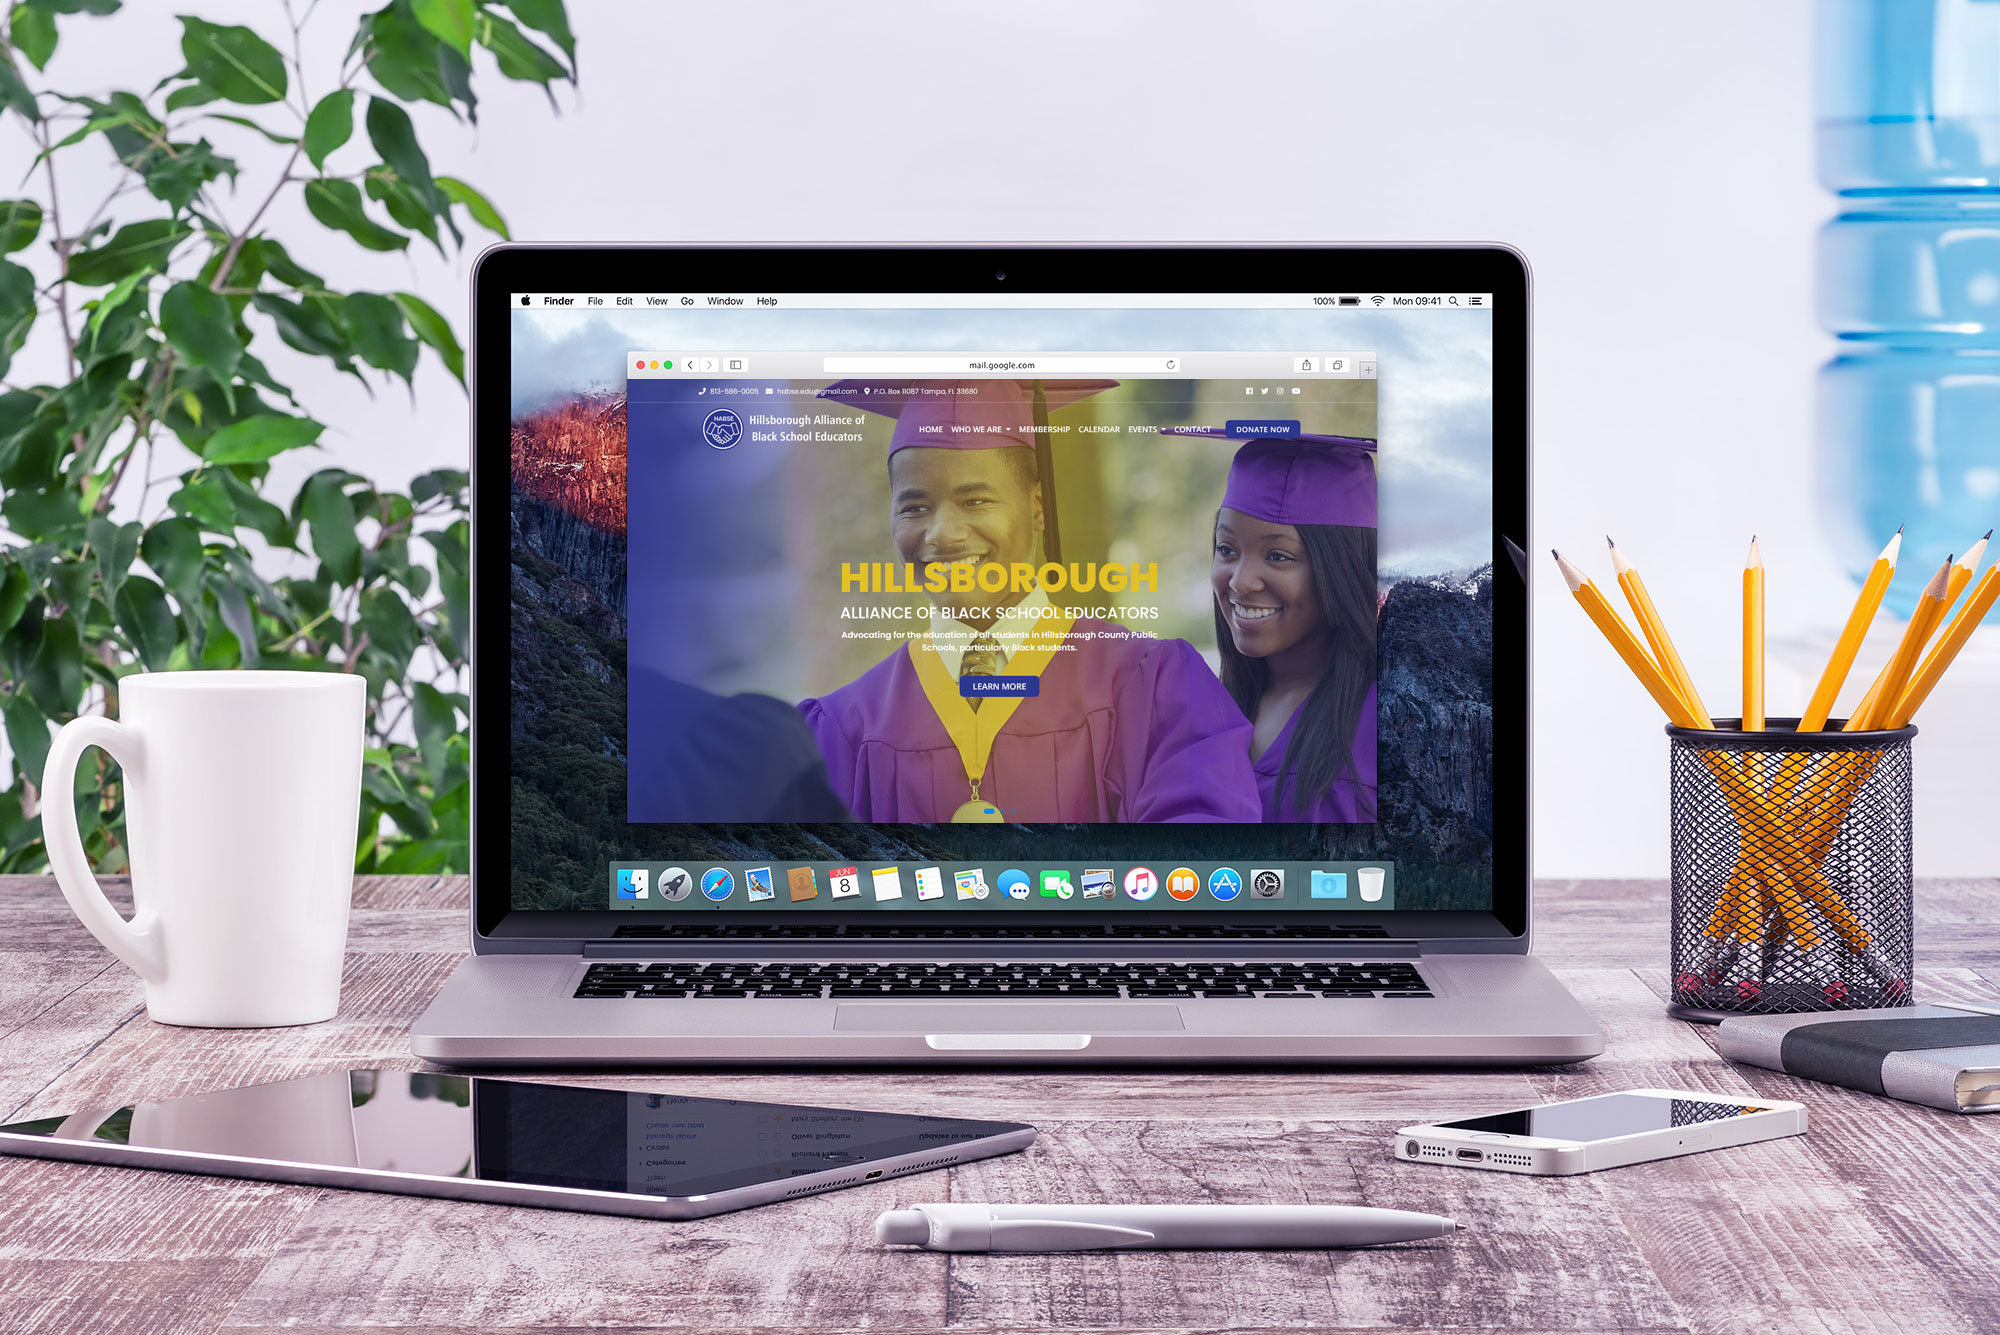 Hillsborough Alliance of Black School Educators Website on Laptop